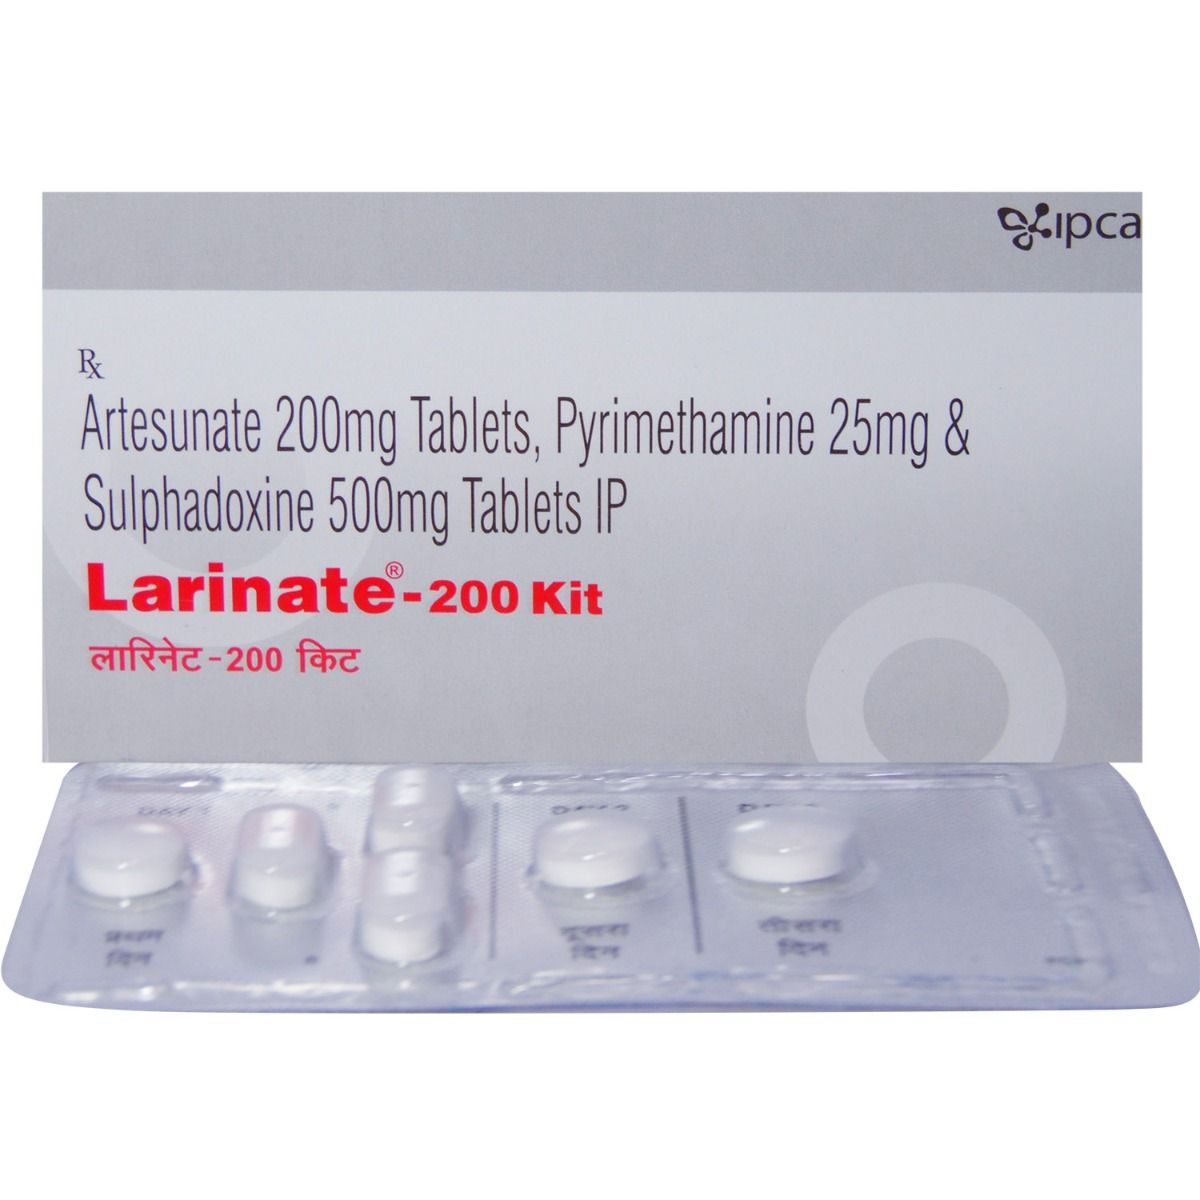 Larinate-200 Kit, Pack of 1 TABLET